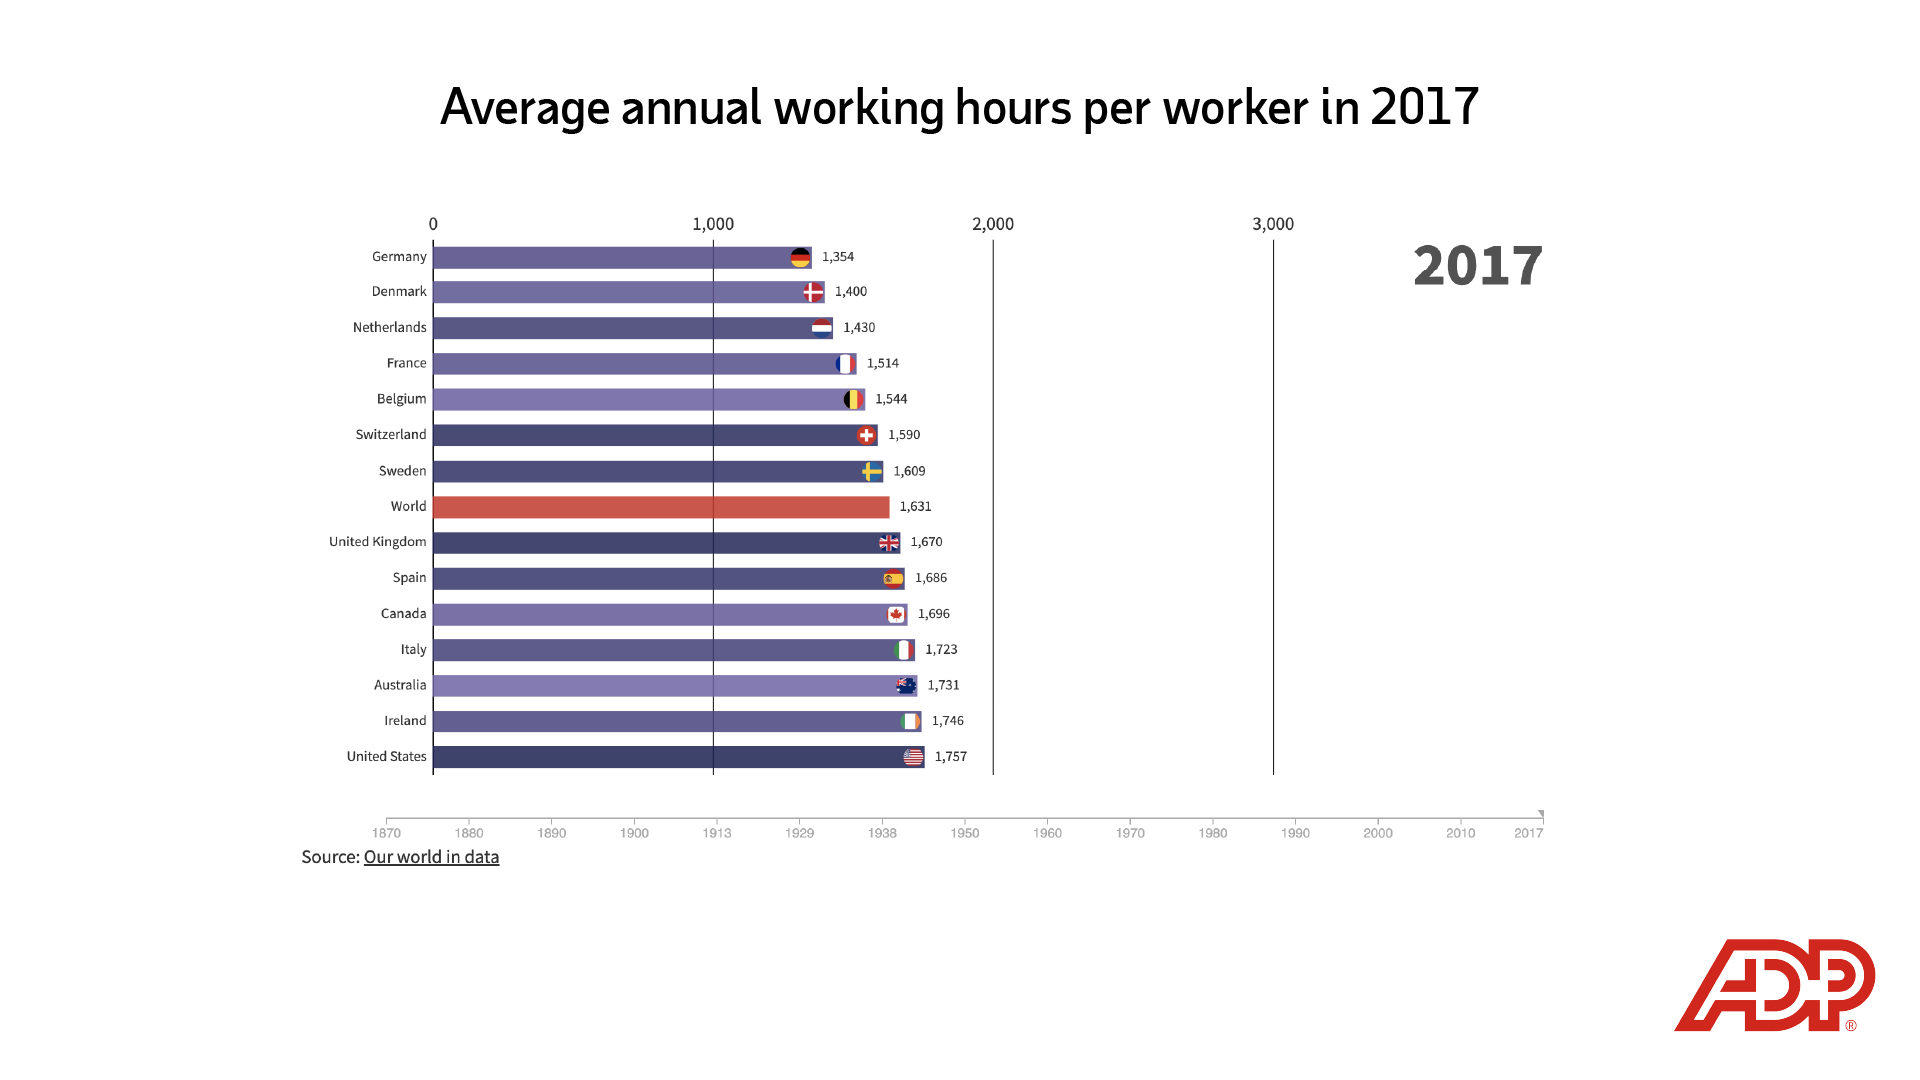 Image description: Bar chart depicting "average annual working hours per worker in 2017": Germany, 1,354; Denmark, 1,400; Netherlands, 1,430; France, 1,514; Belgium 1,544; Switzerland, 1,590; Sweden, 1,609; world average 1,631; United Kingdom 1,670; Spain, 1,686; Canada, 1,696; Italy, 1,723; Australia, 1,731; Ireland, 1,746; United States, 1,757. End of alt text.